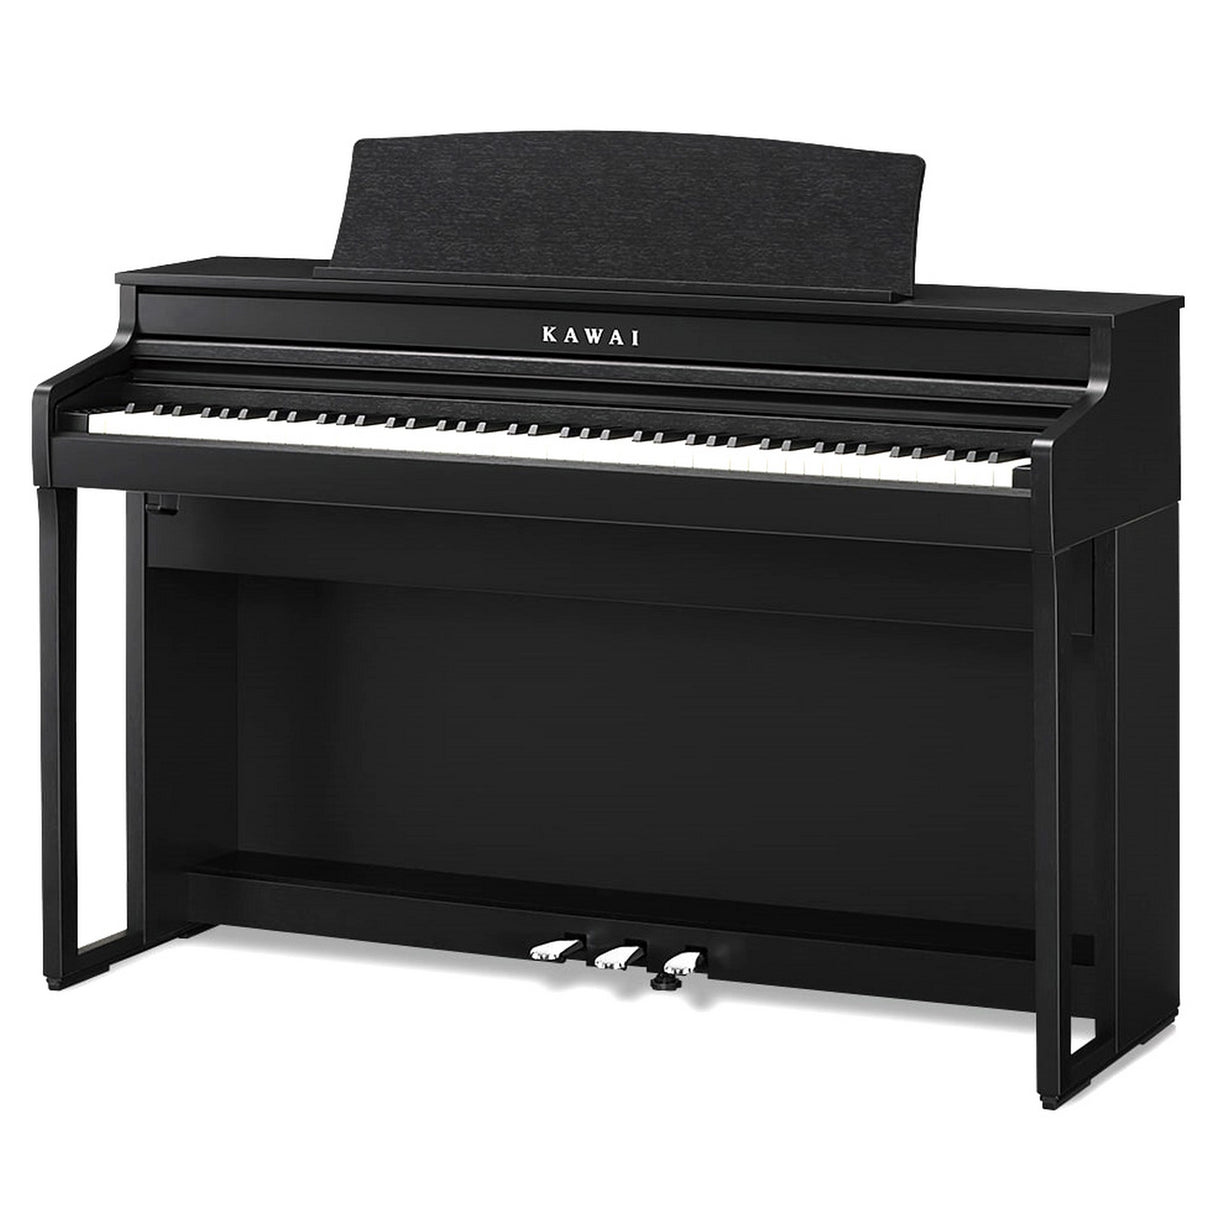 Kawai CA401 88-Key Digital Piano with Bench, Satin Black